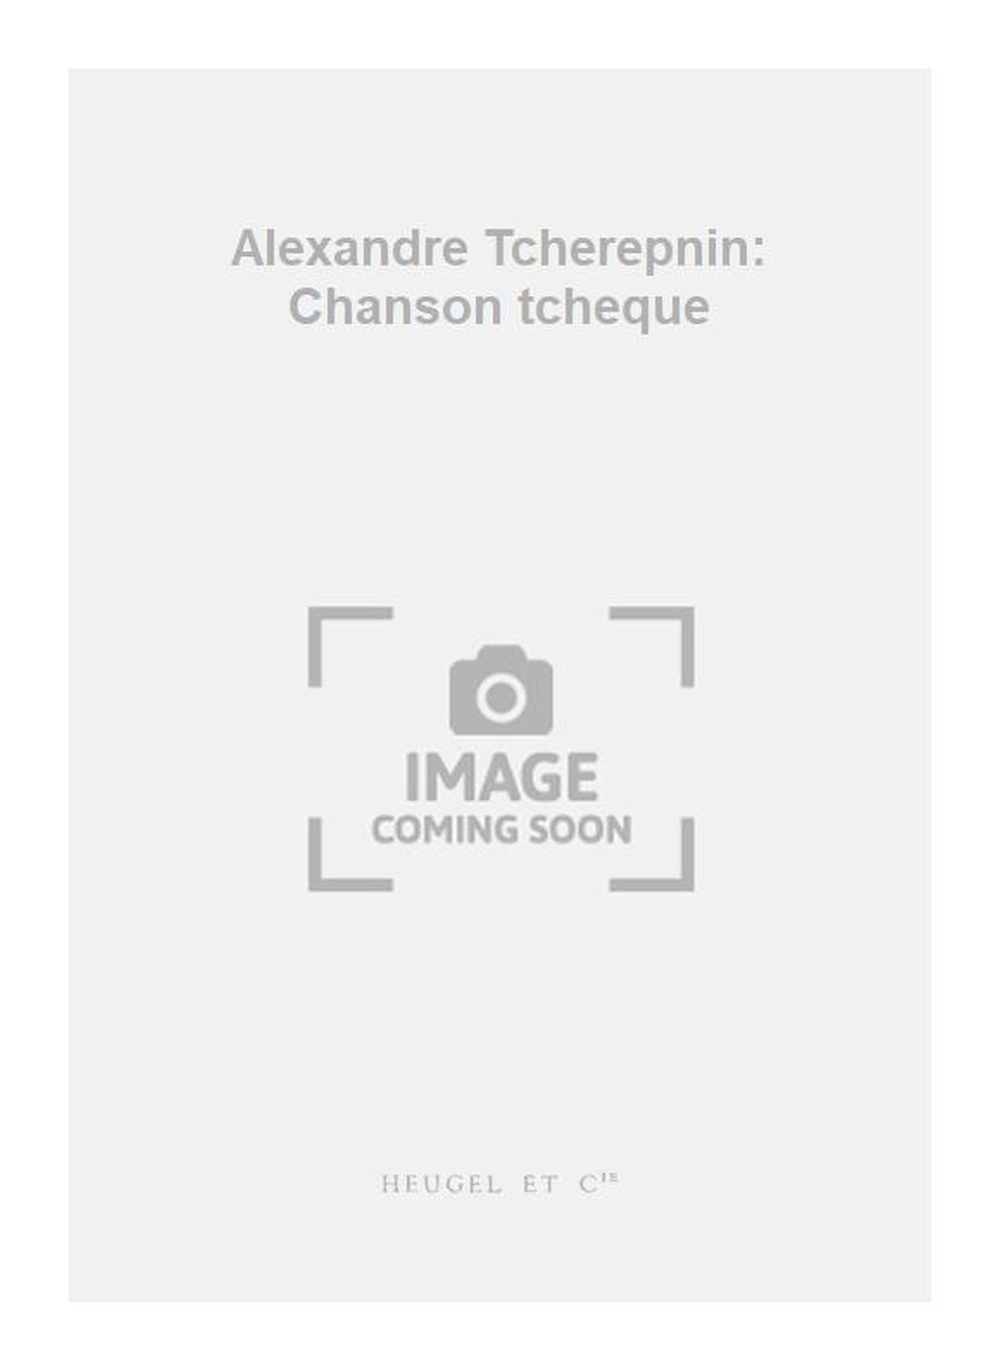 Alexander Tcherepnin: Alexandre Tcherepnin: Chanson tcheque